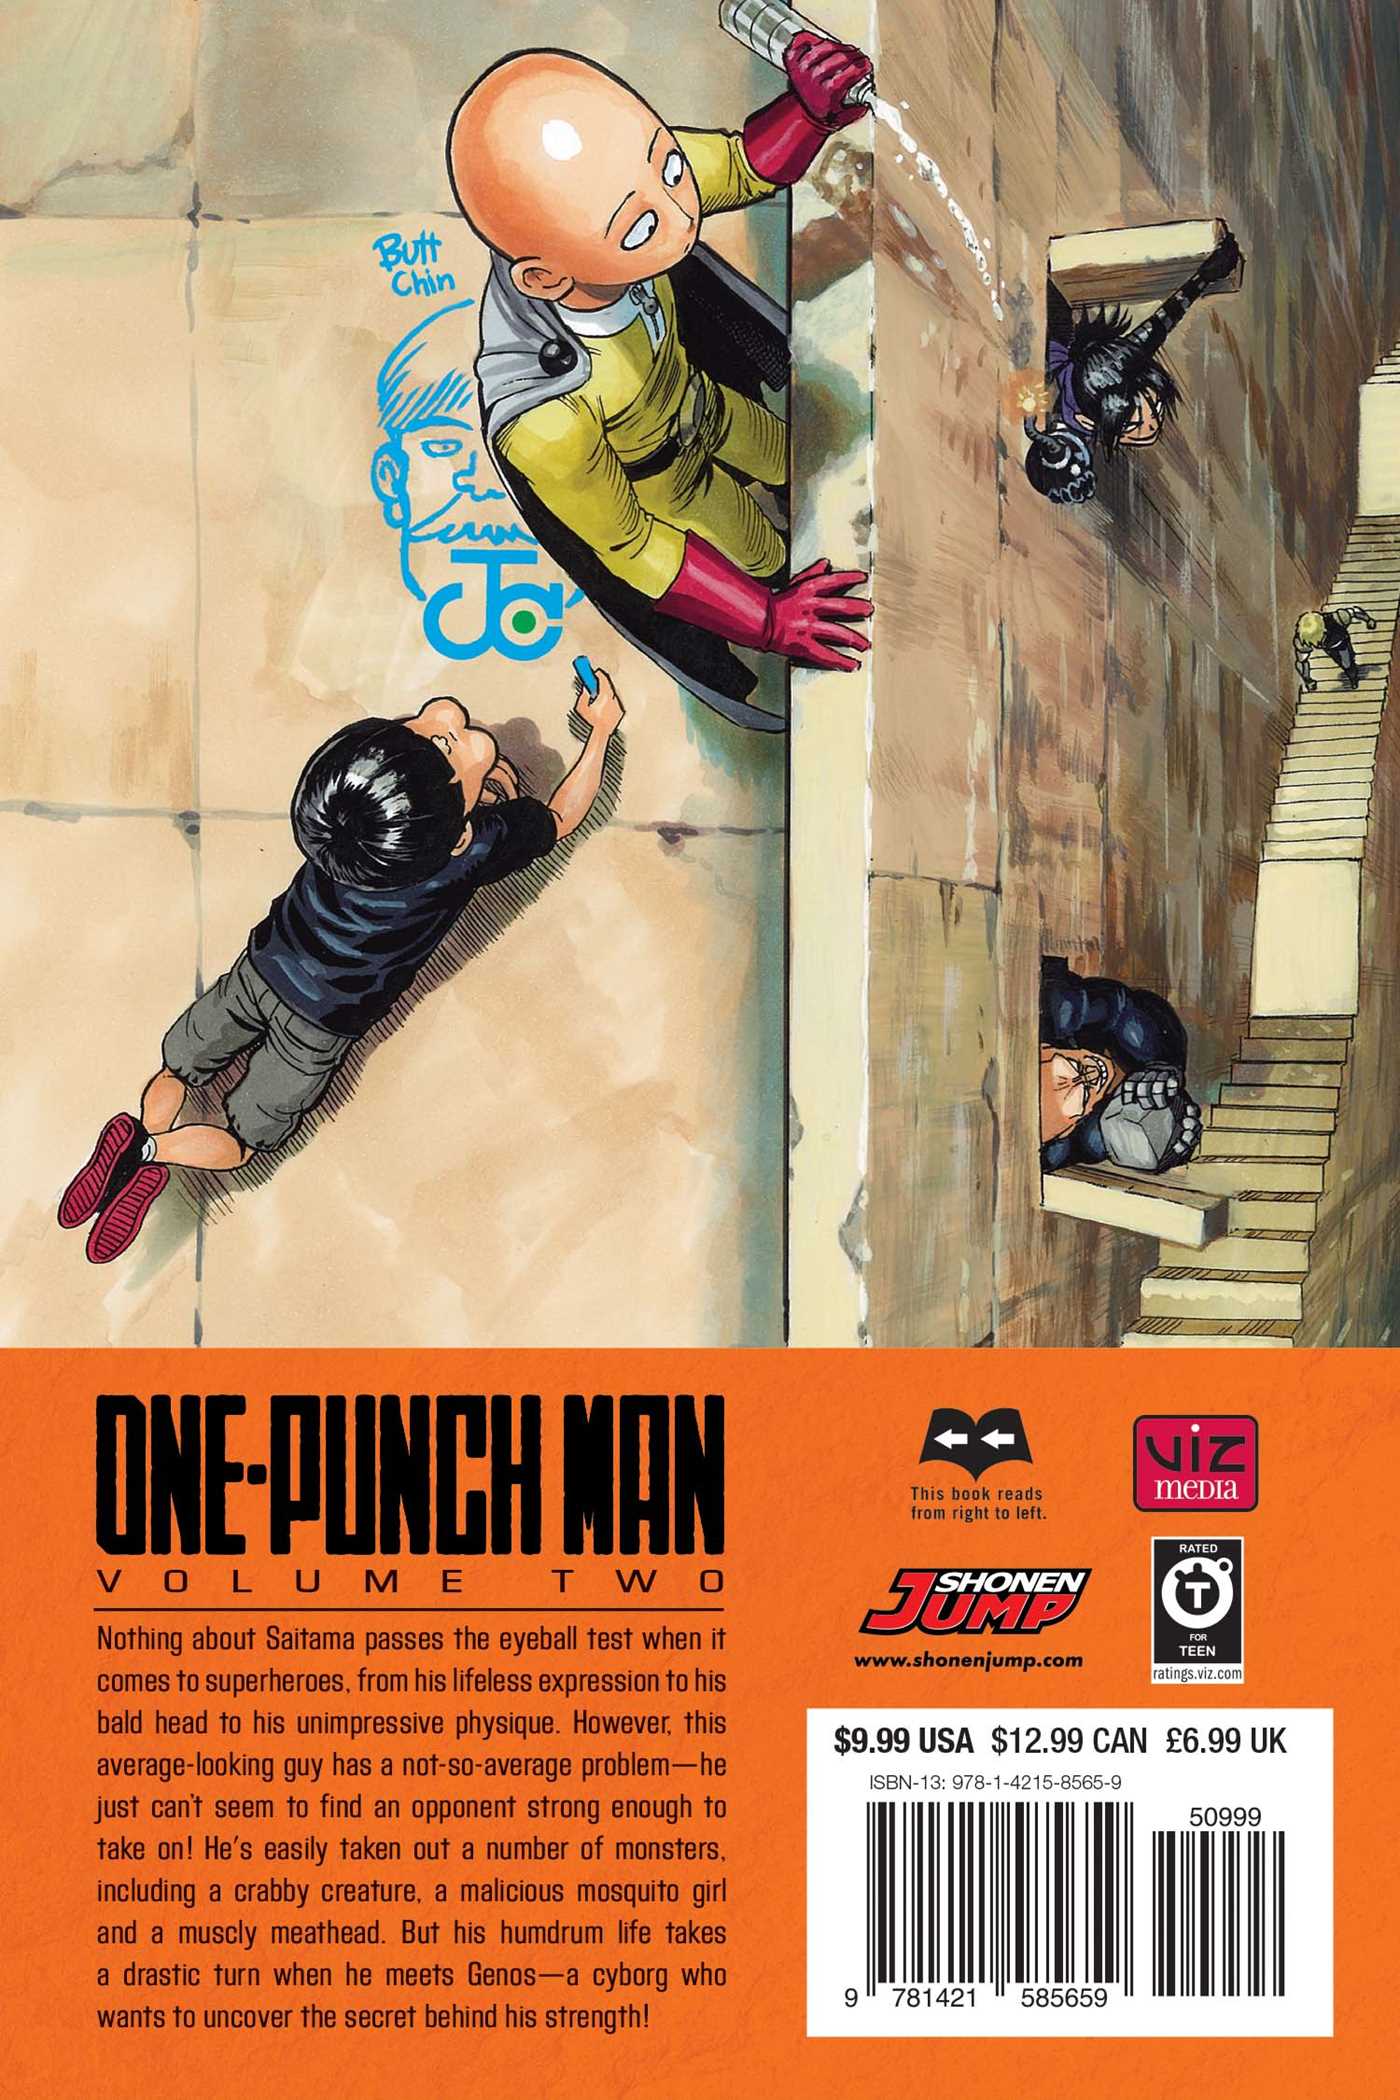 One-Punch Man, Vol. 2